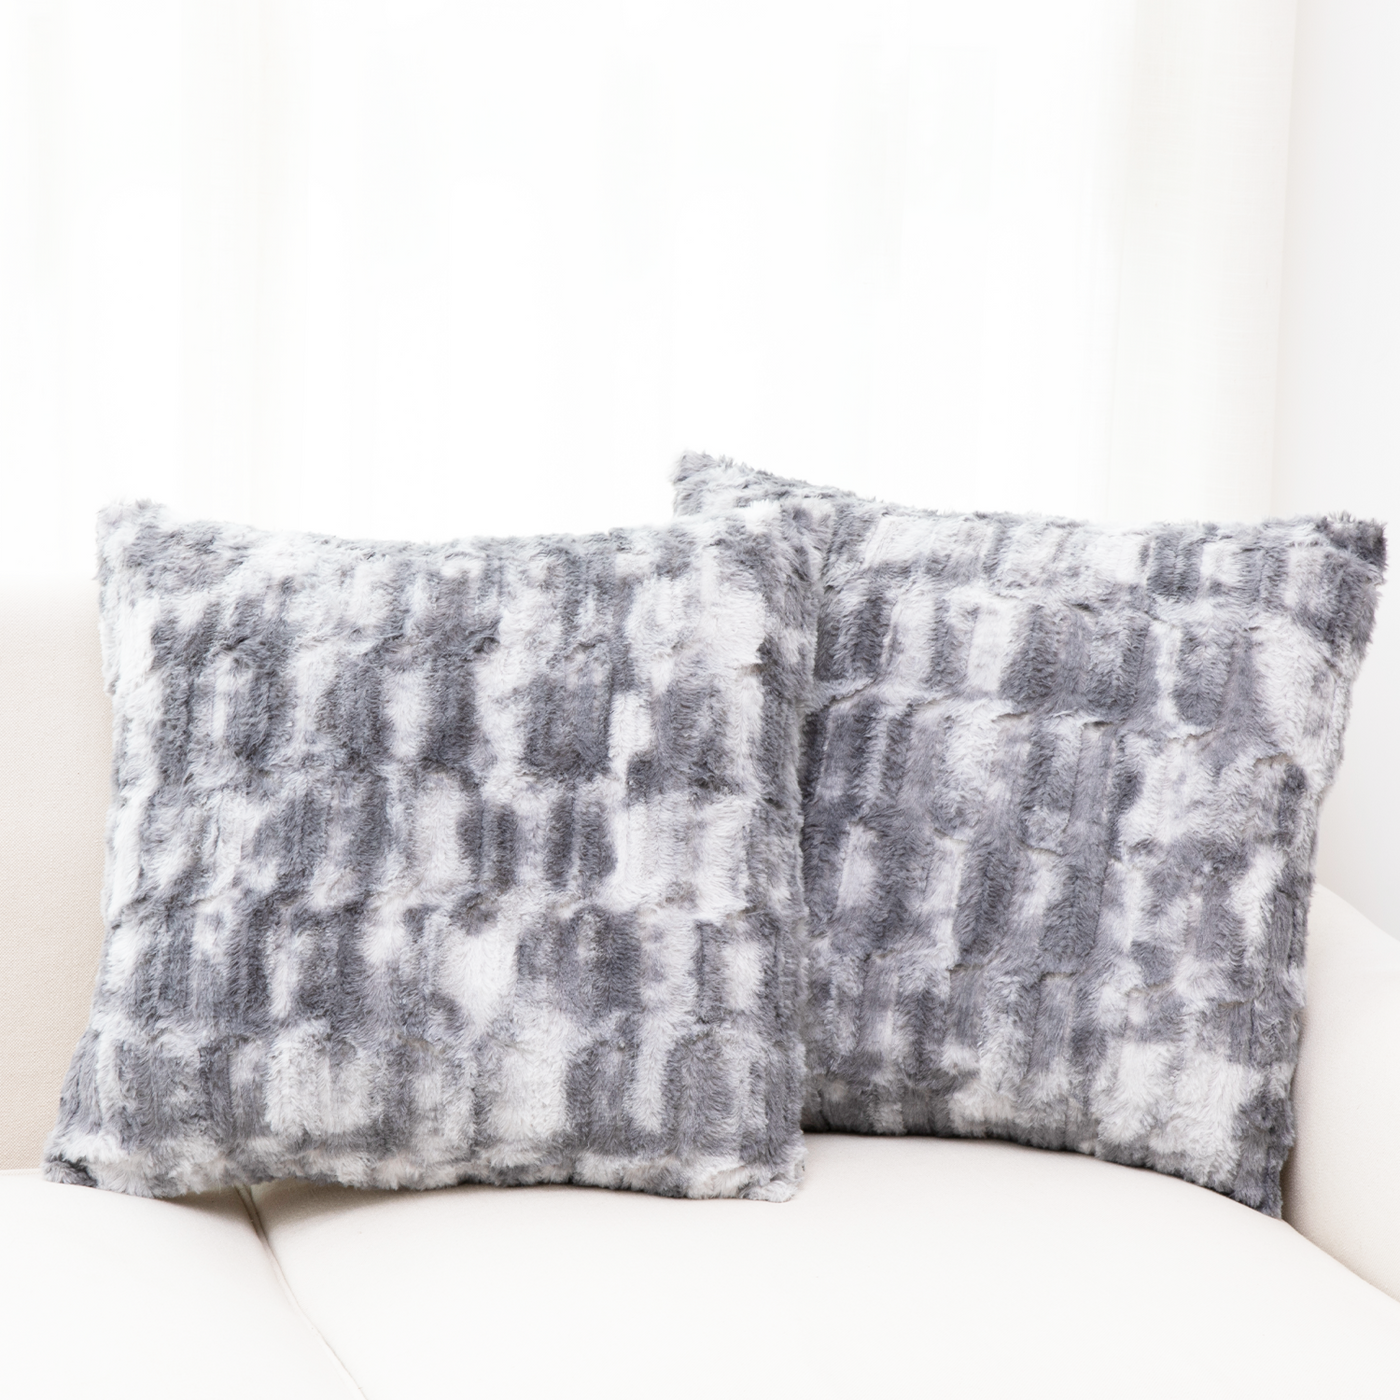 Set of 2 Luxury 18x18 Decorative Pillows, Zippered Throw Pillow